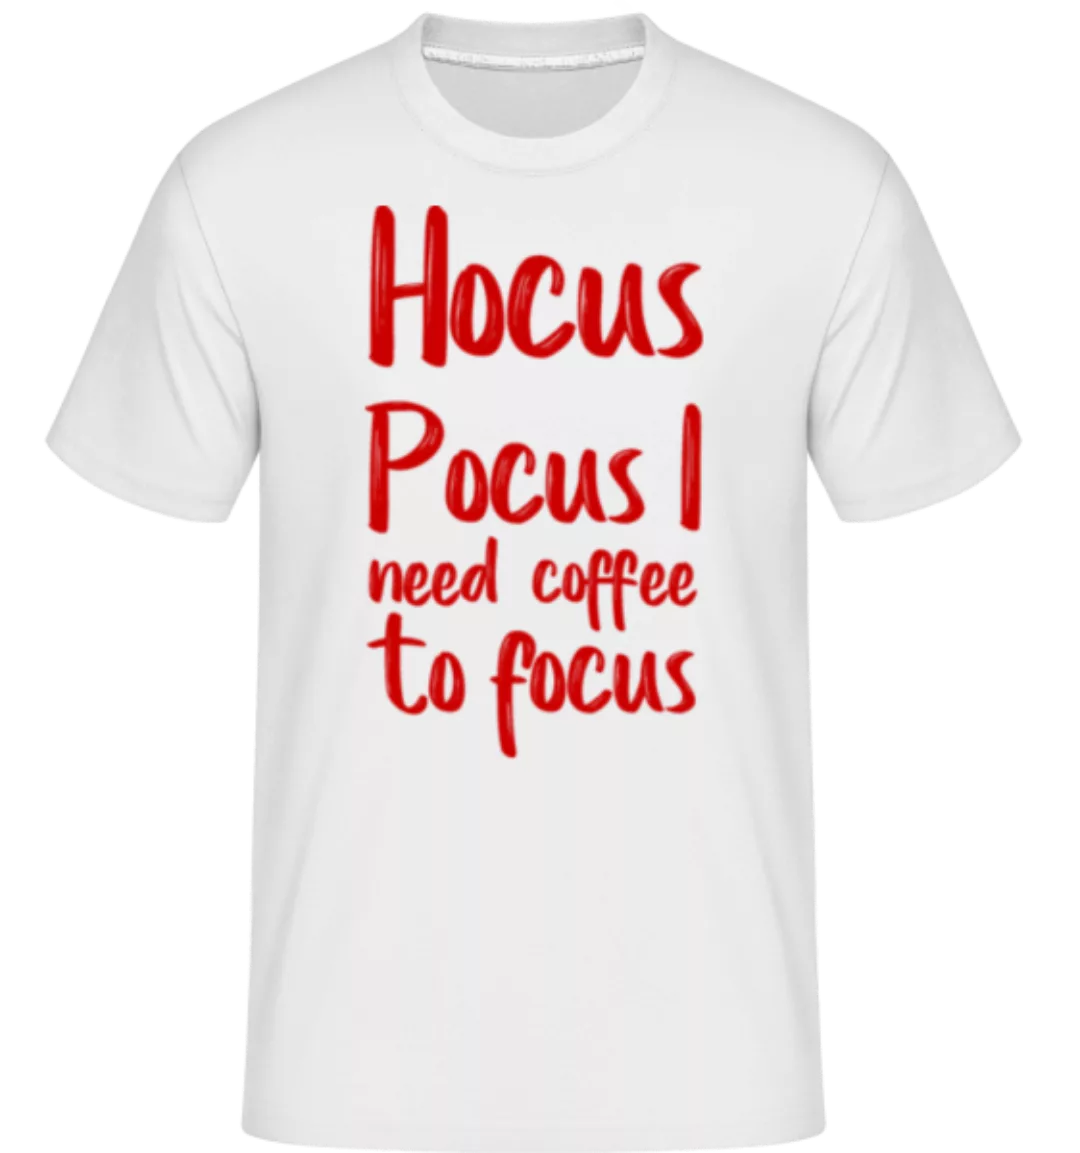 Hocus Pocus I Need Coffe To Focu · Shirtinator Männer T-Shirt günstig online kaufen